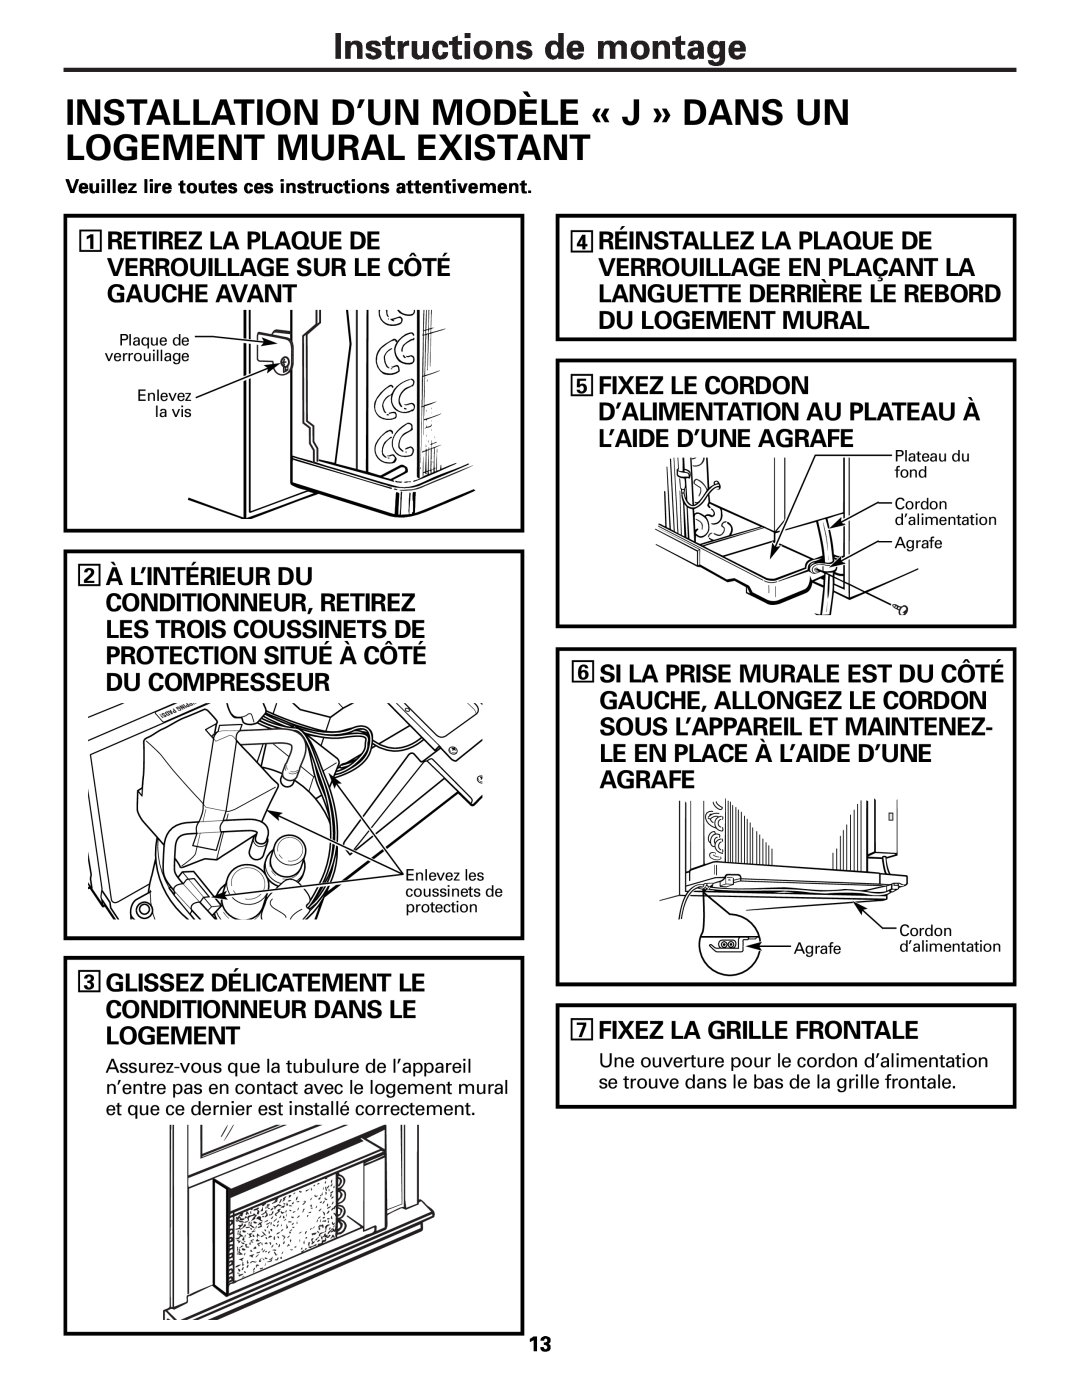 GE Cool Only installation instructions L’Aide D’Une Agrafe, 7FIXEZ LA GRILLE FRONTALE, Instructions de montage 